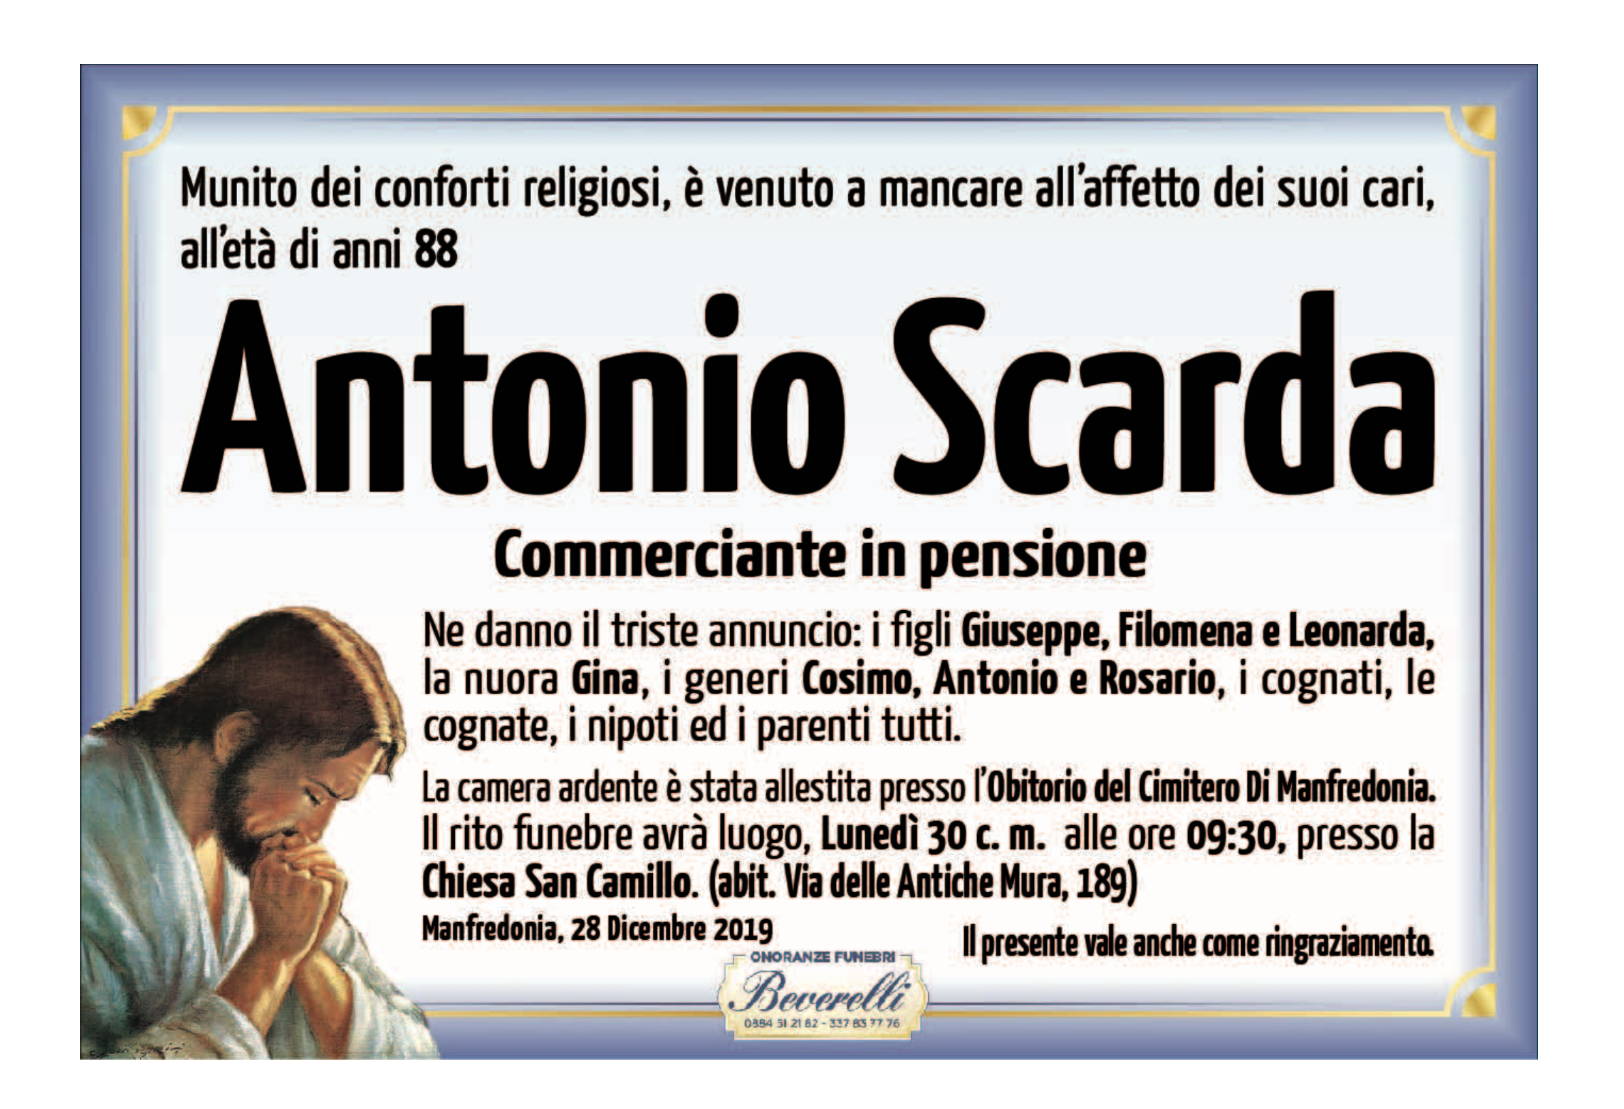 Antonio Scarda